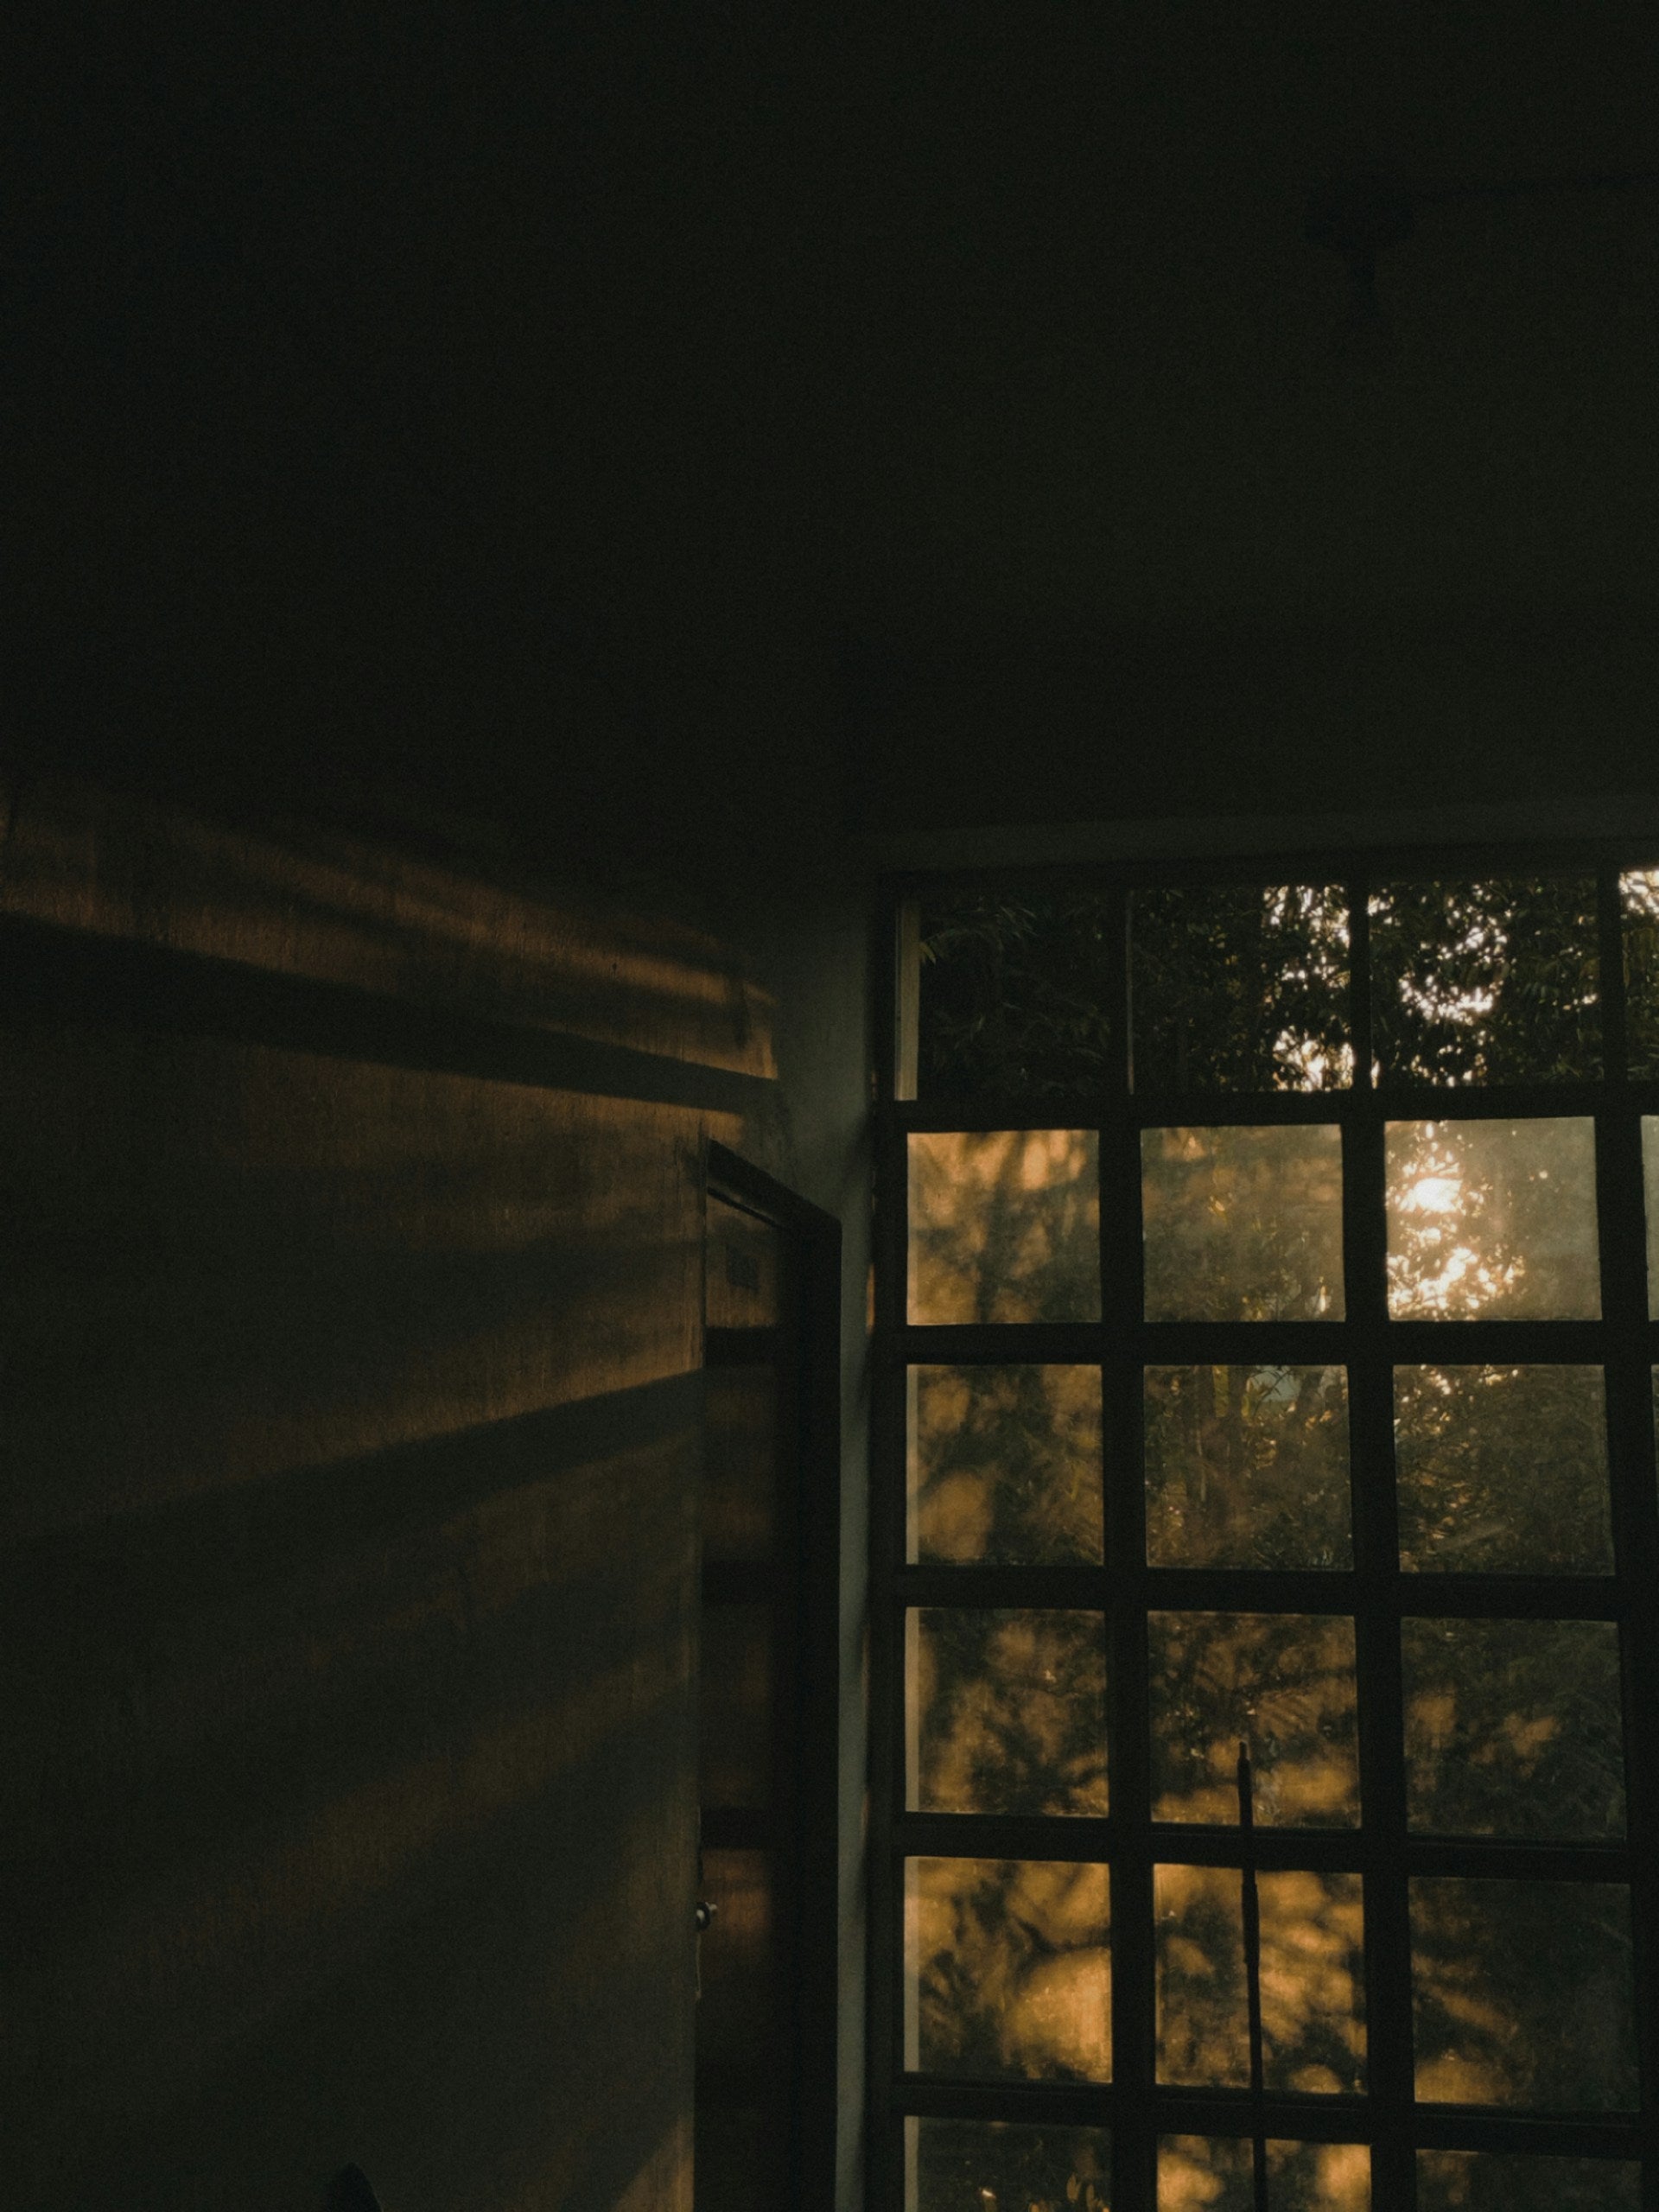 Sunlight shining through a window in a dark room.